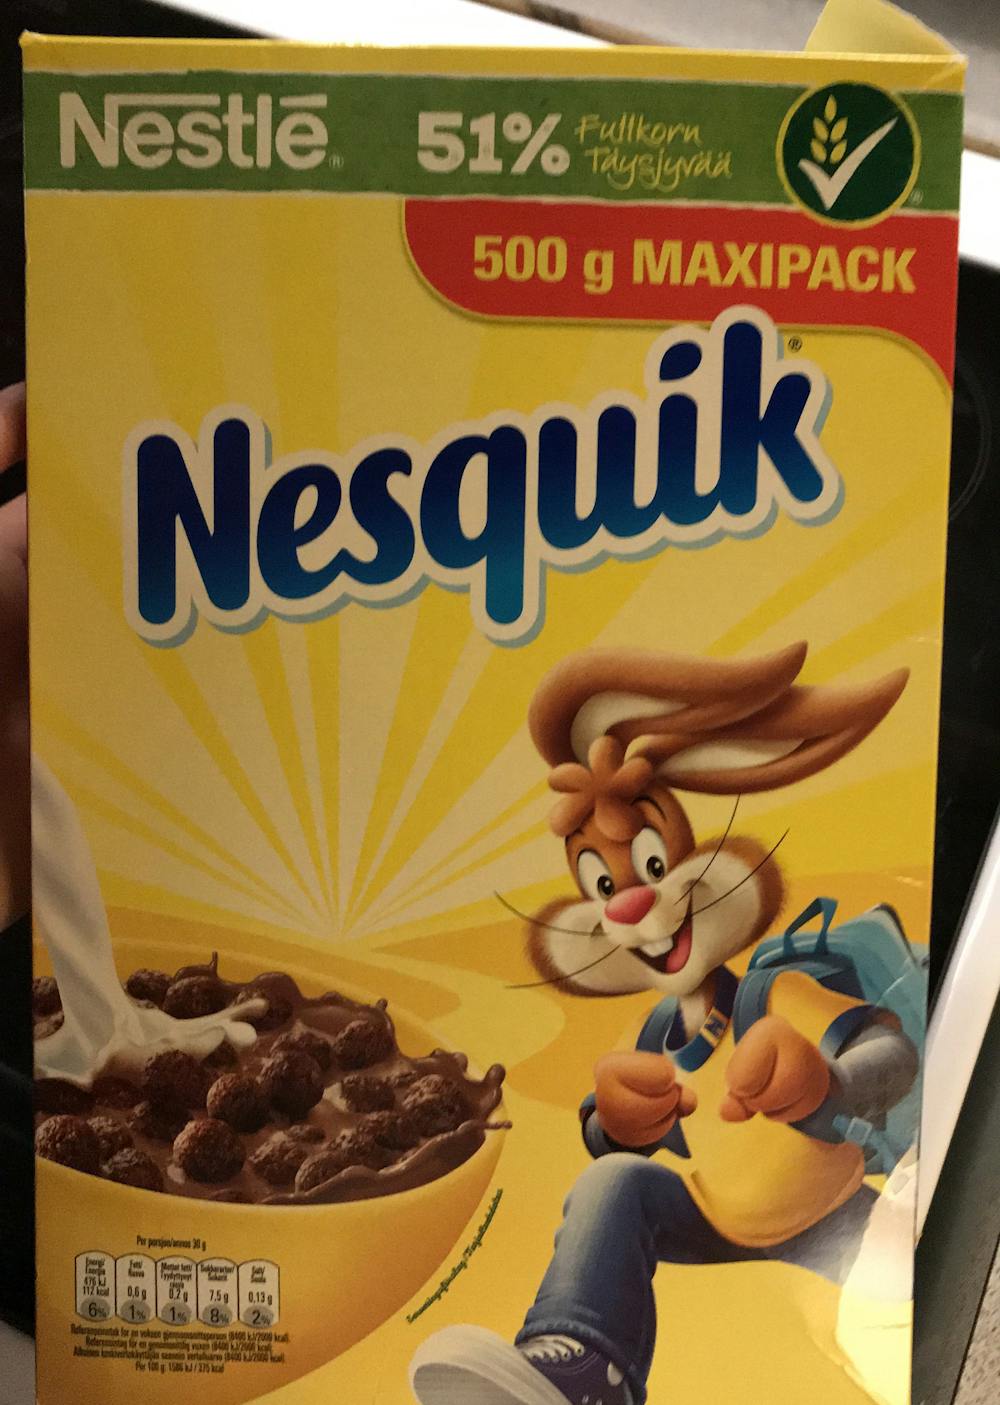 Nesquik, Nestlé